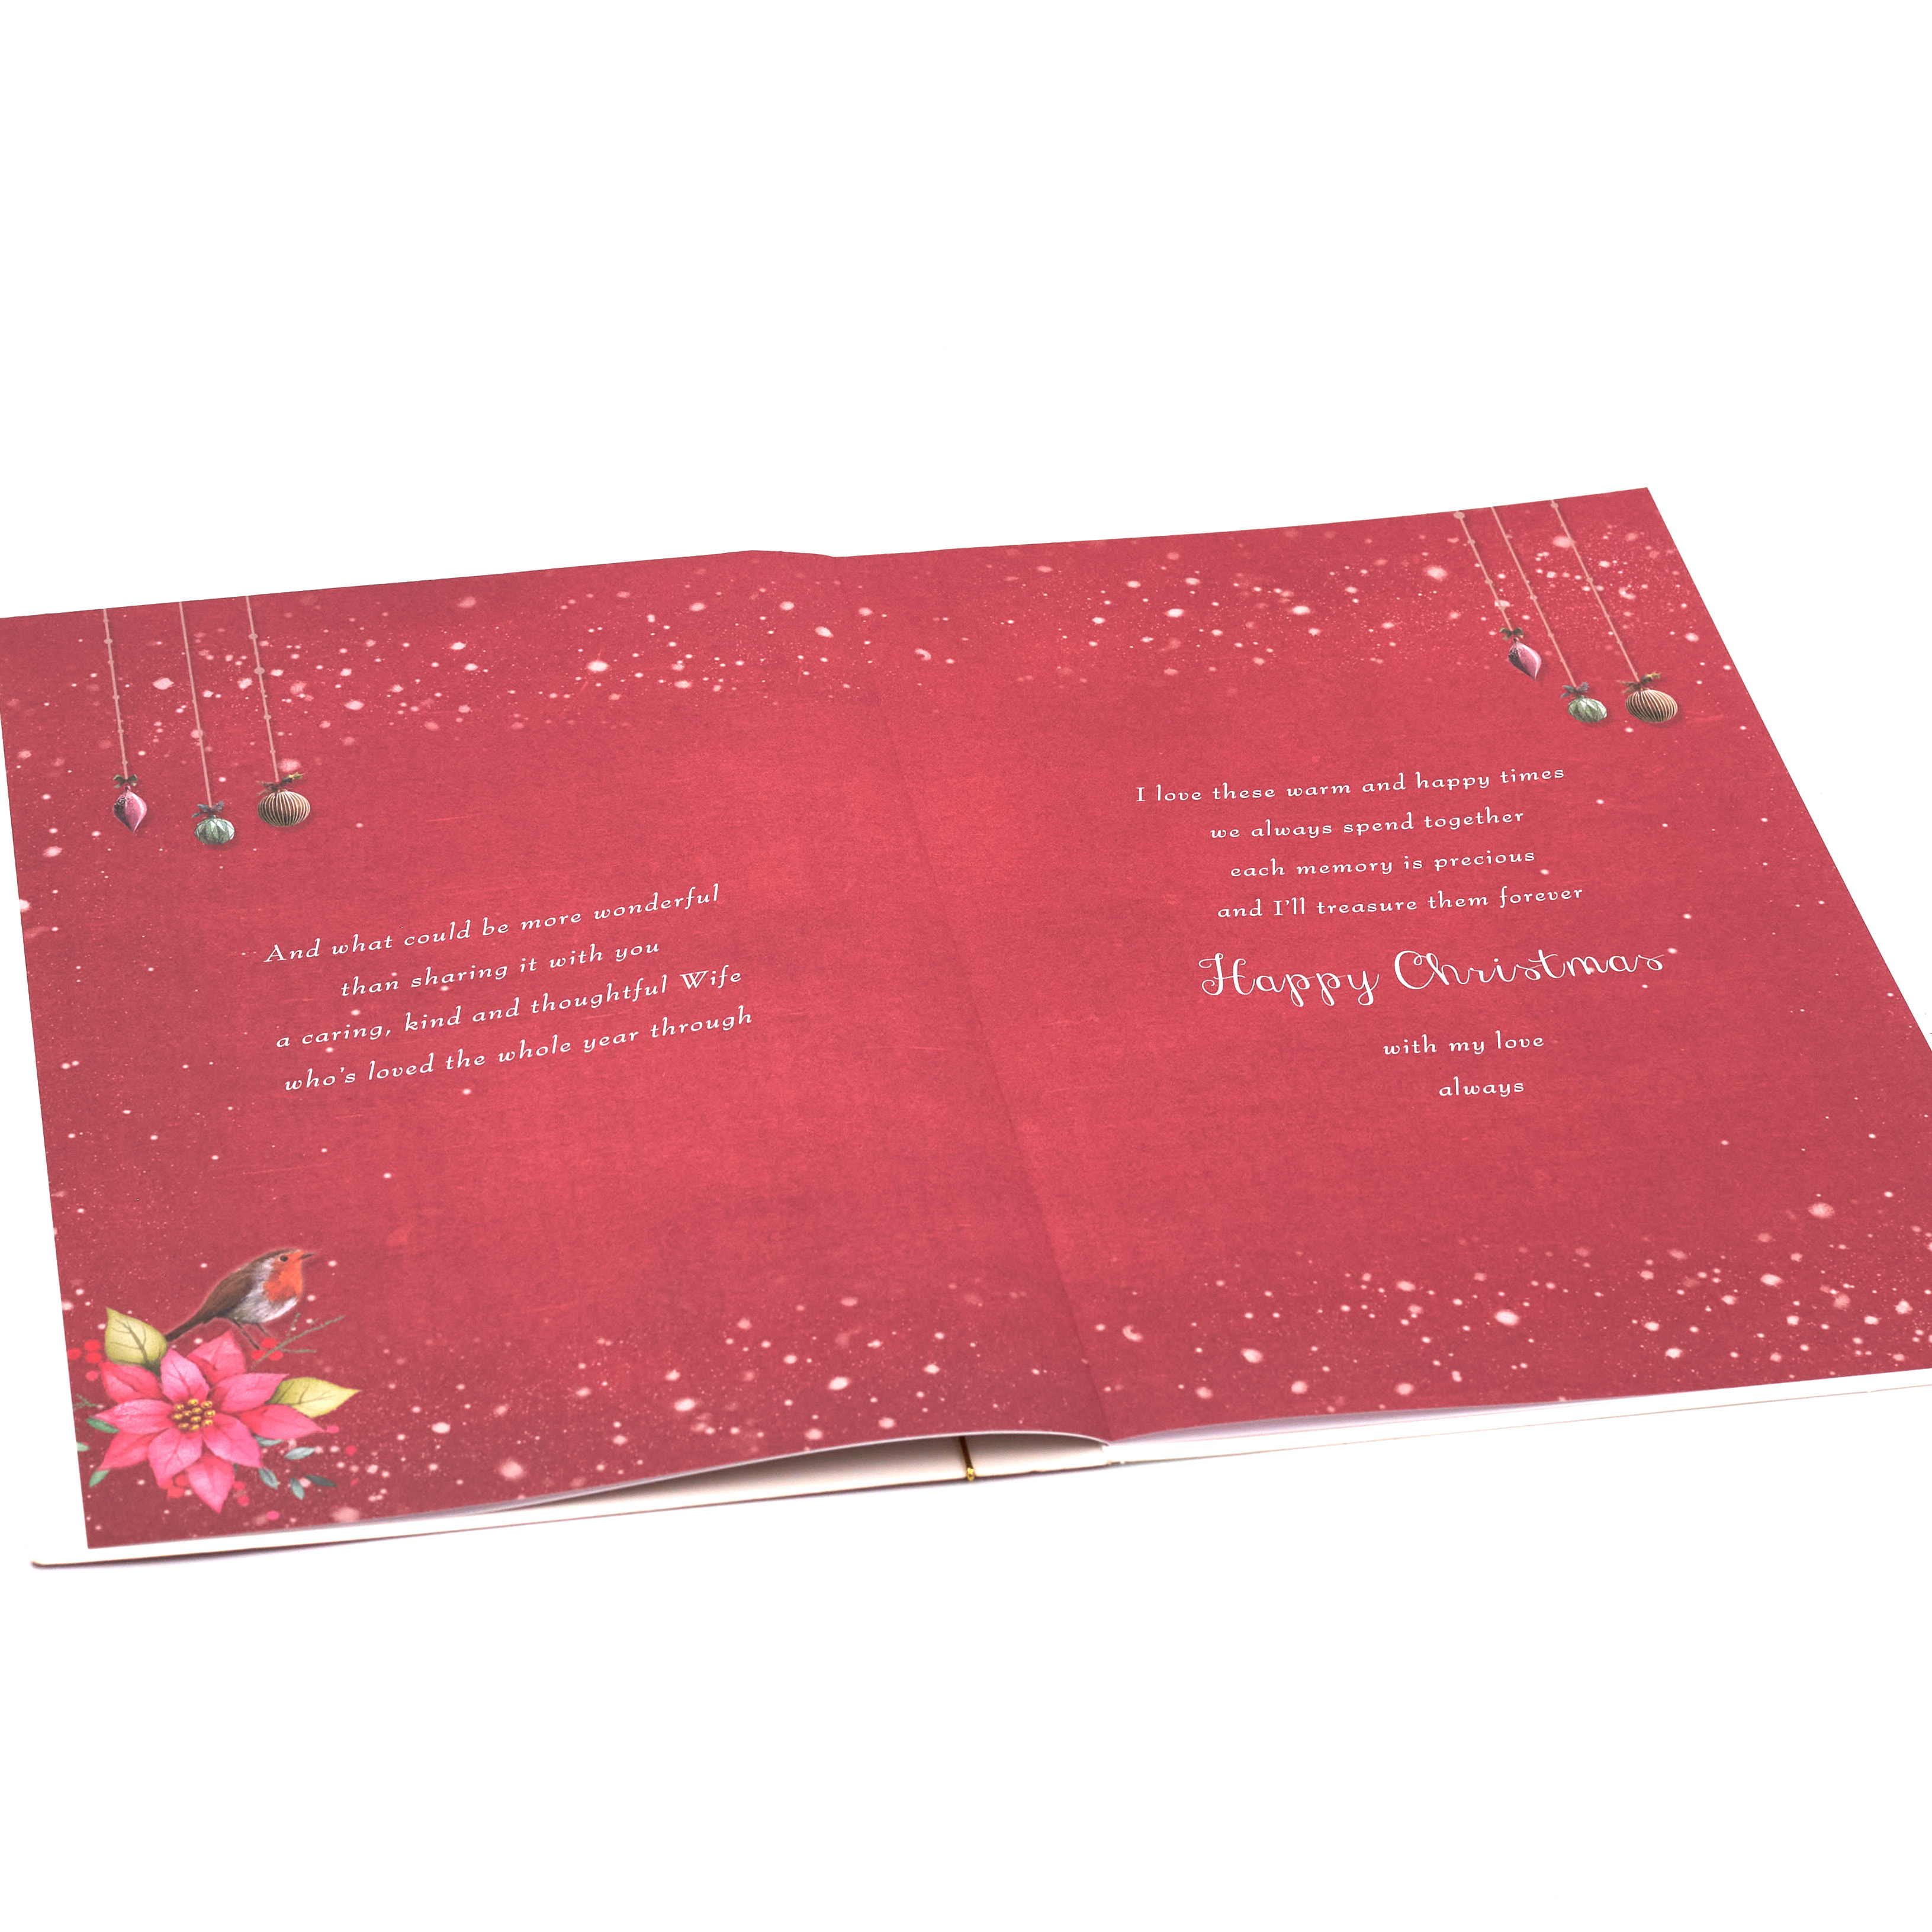 Christmas Card - Wonderful Wife, Traditional Verse